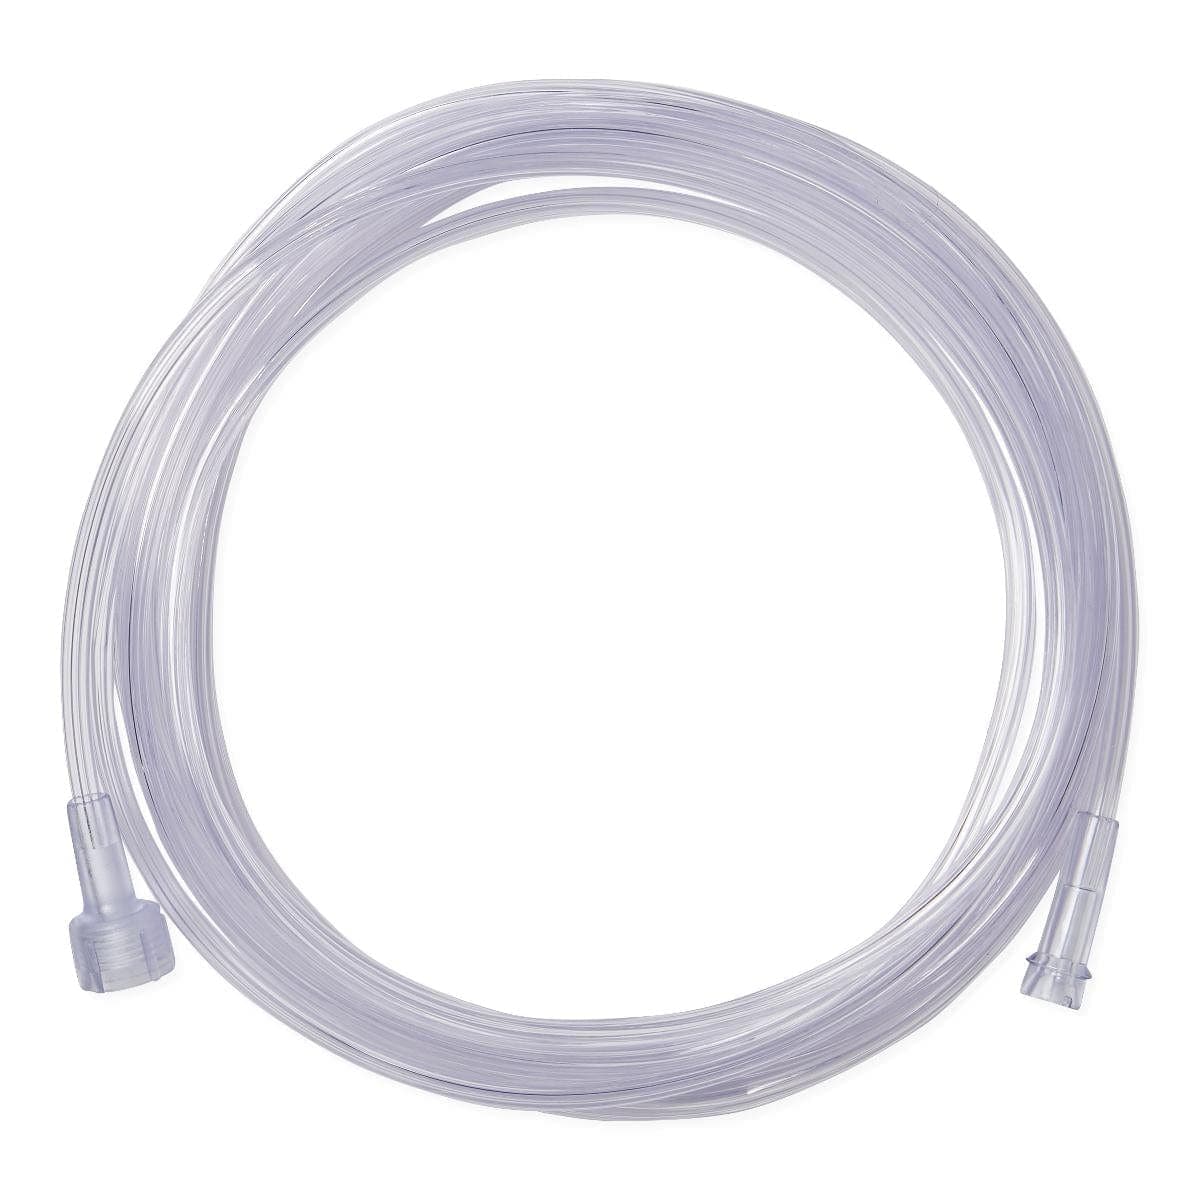 Medline Medline Clear Oxygen Tubing with Universal Connector HCSU455010